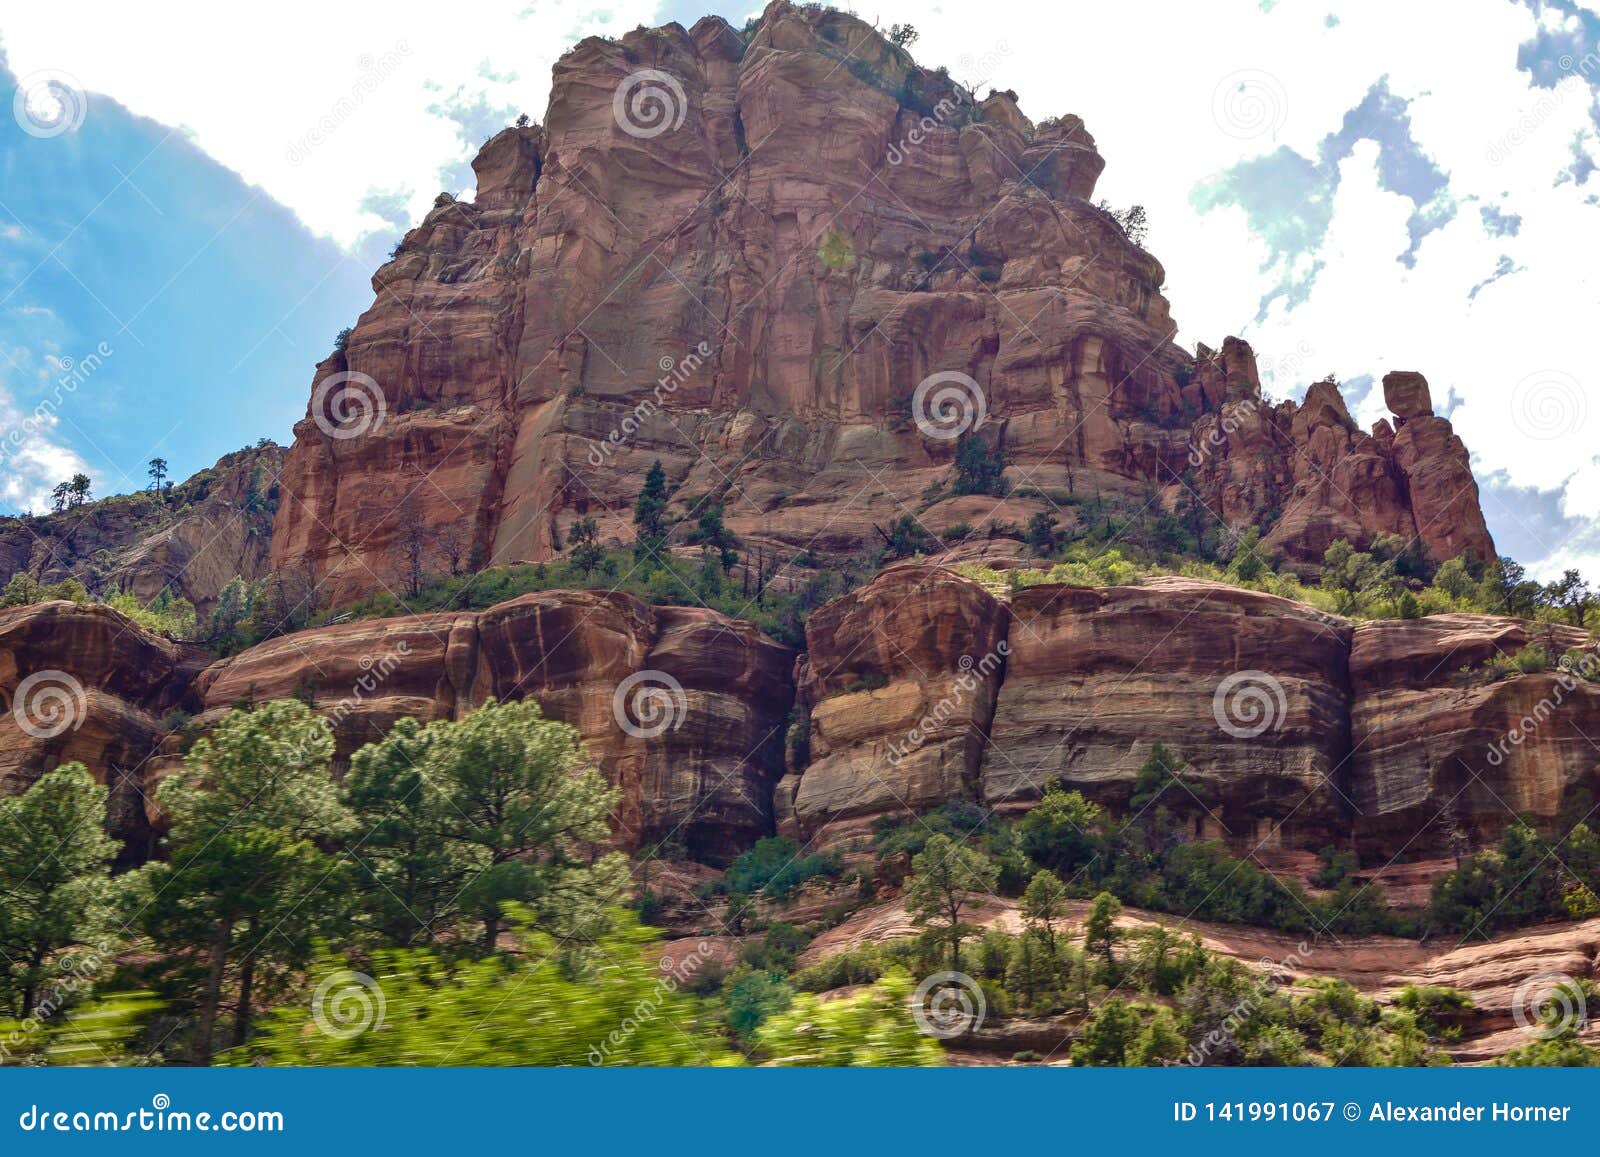 beautiful redrock stone formation in sedona